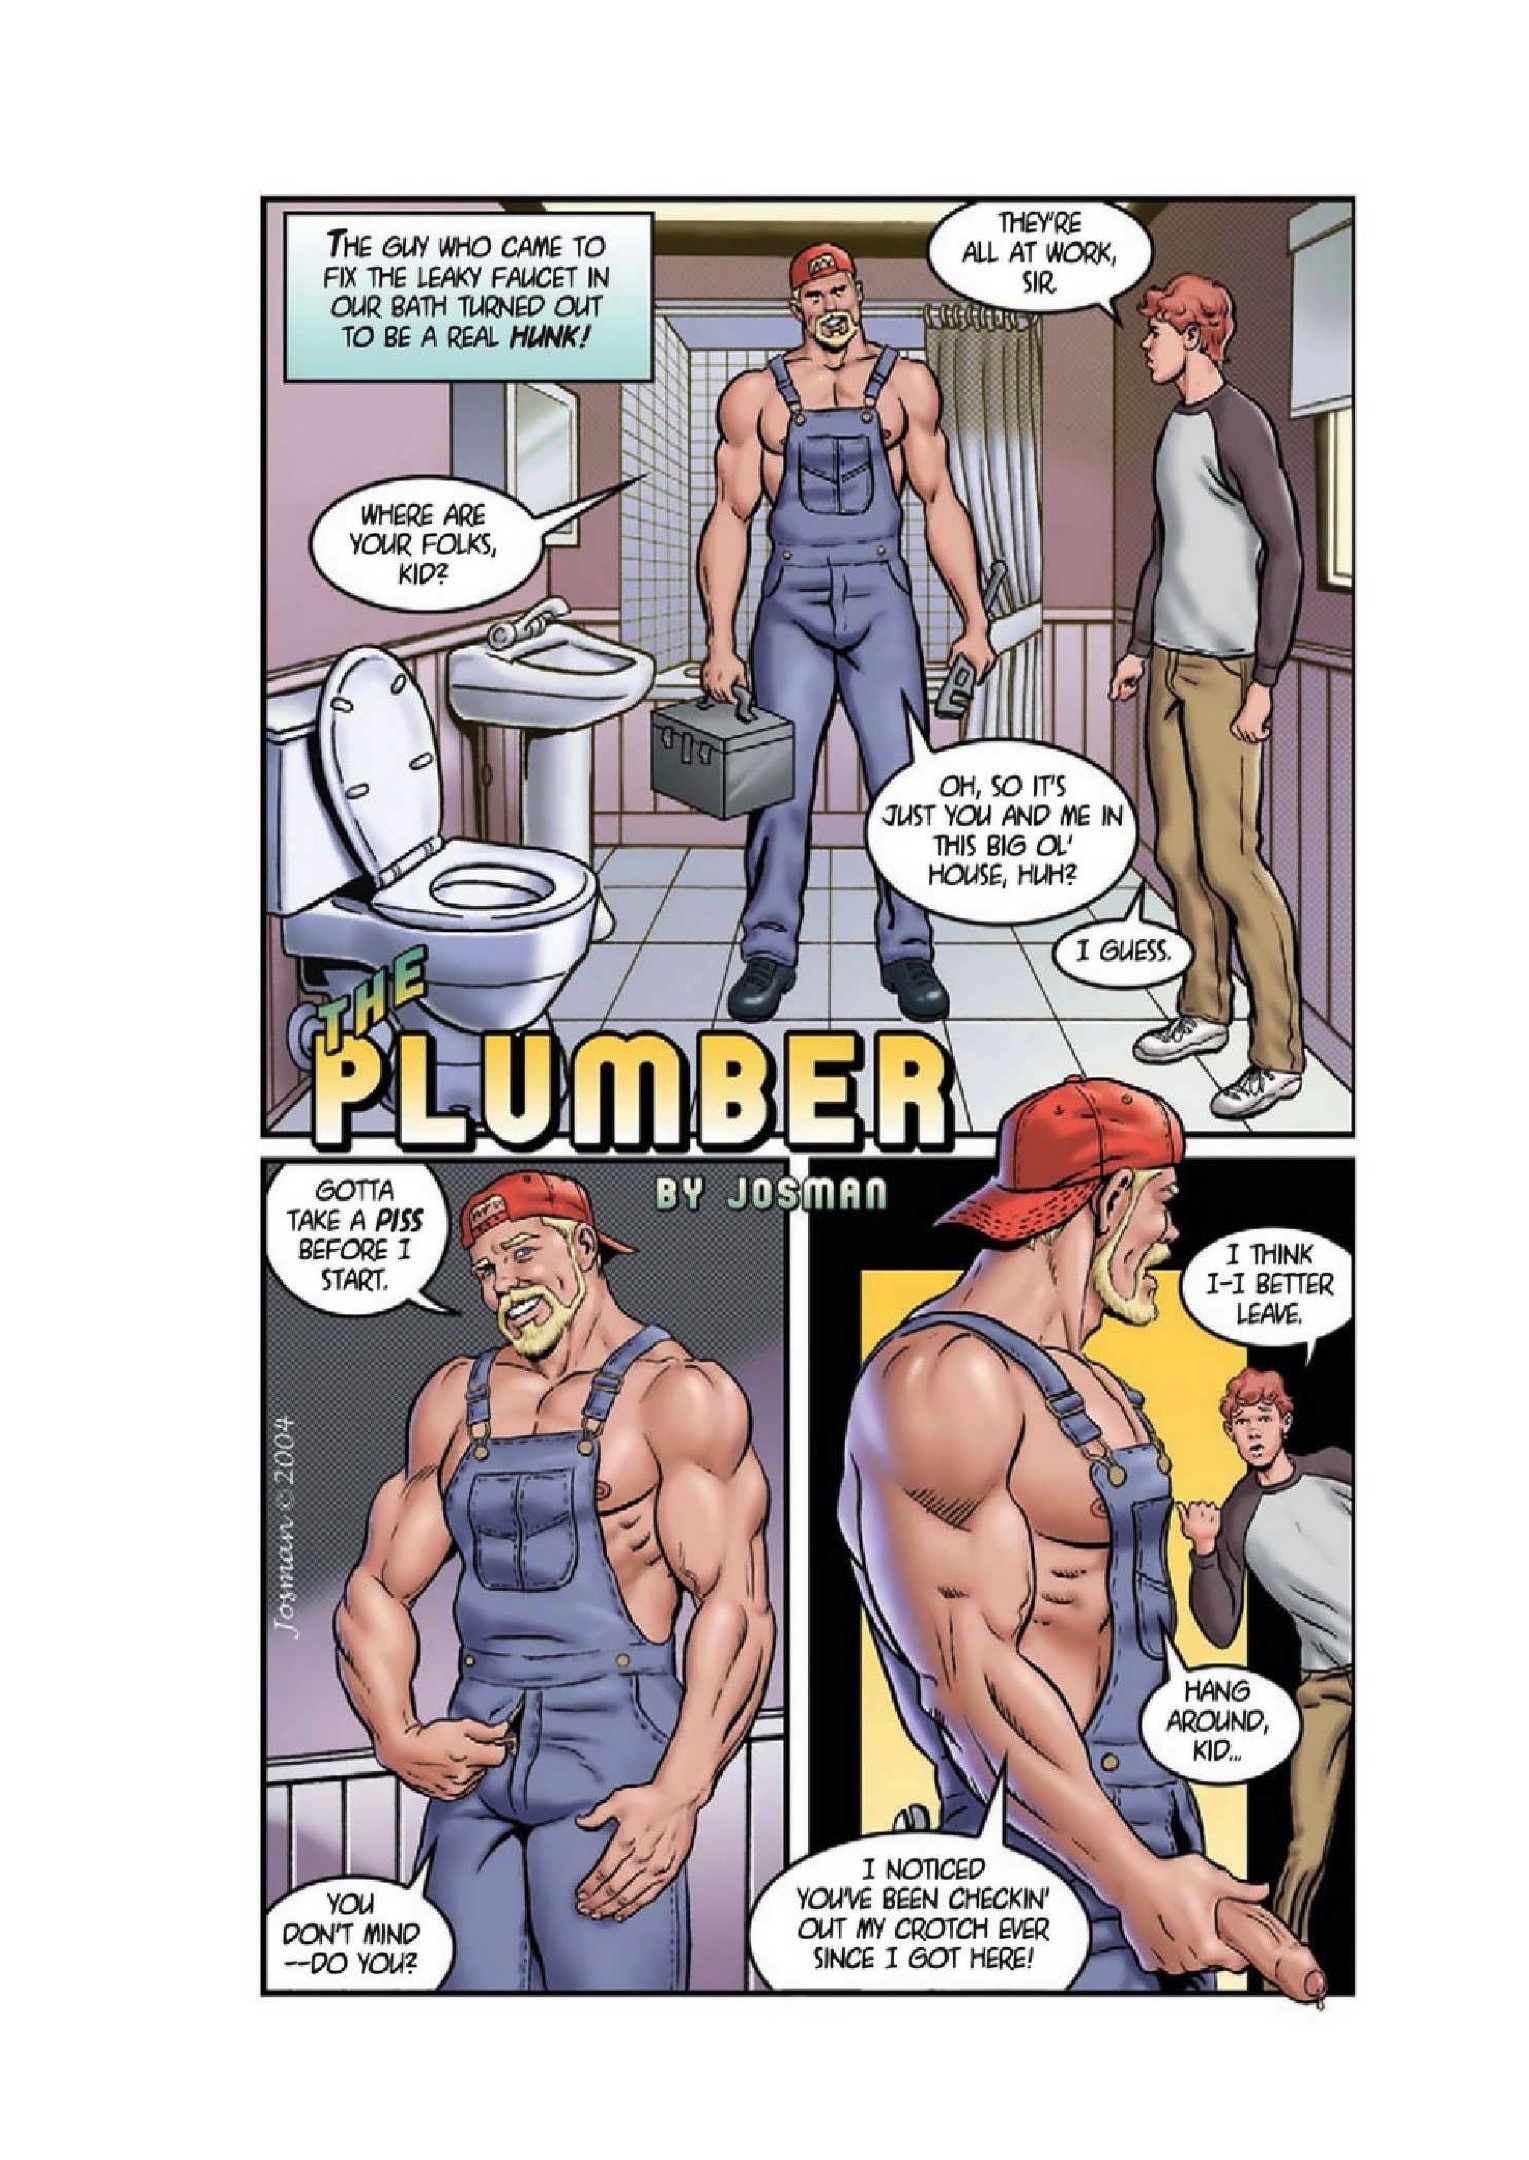 Comic dad gay porn plumber